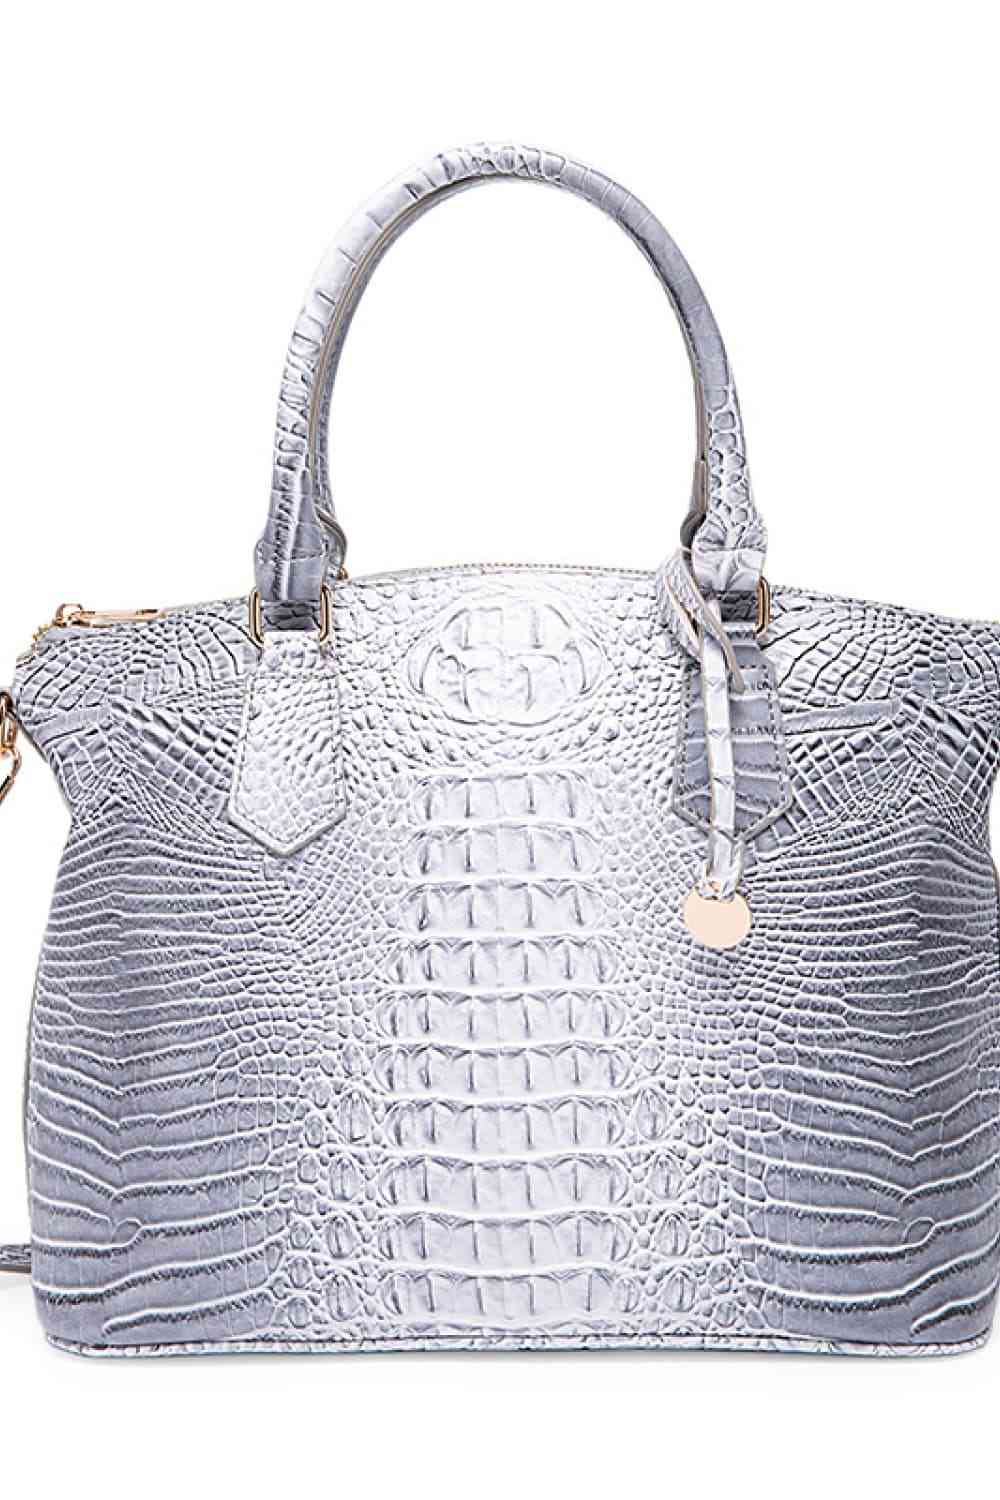 TEEK - Scheduled Style Handbag BAG TEEK Trend Light Gray  